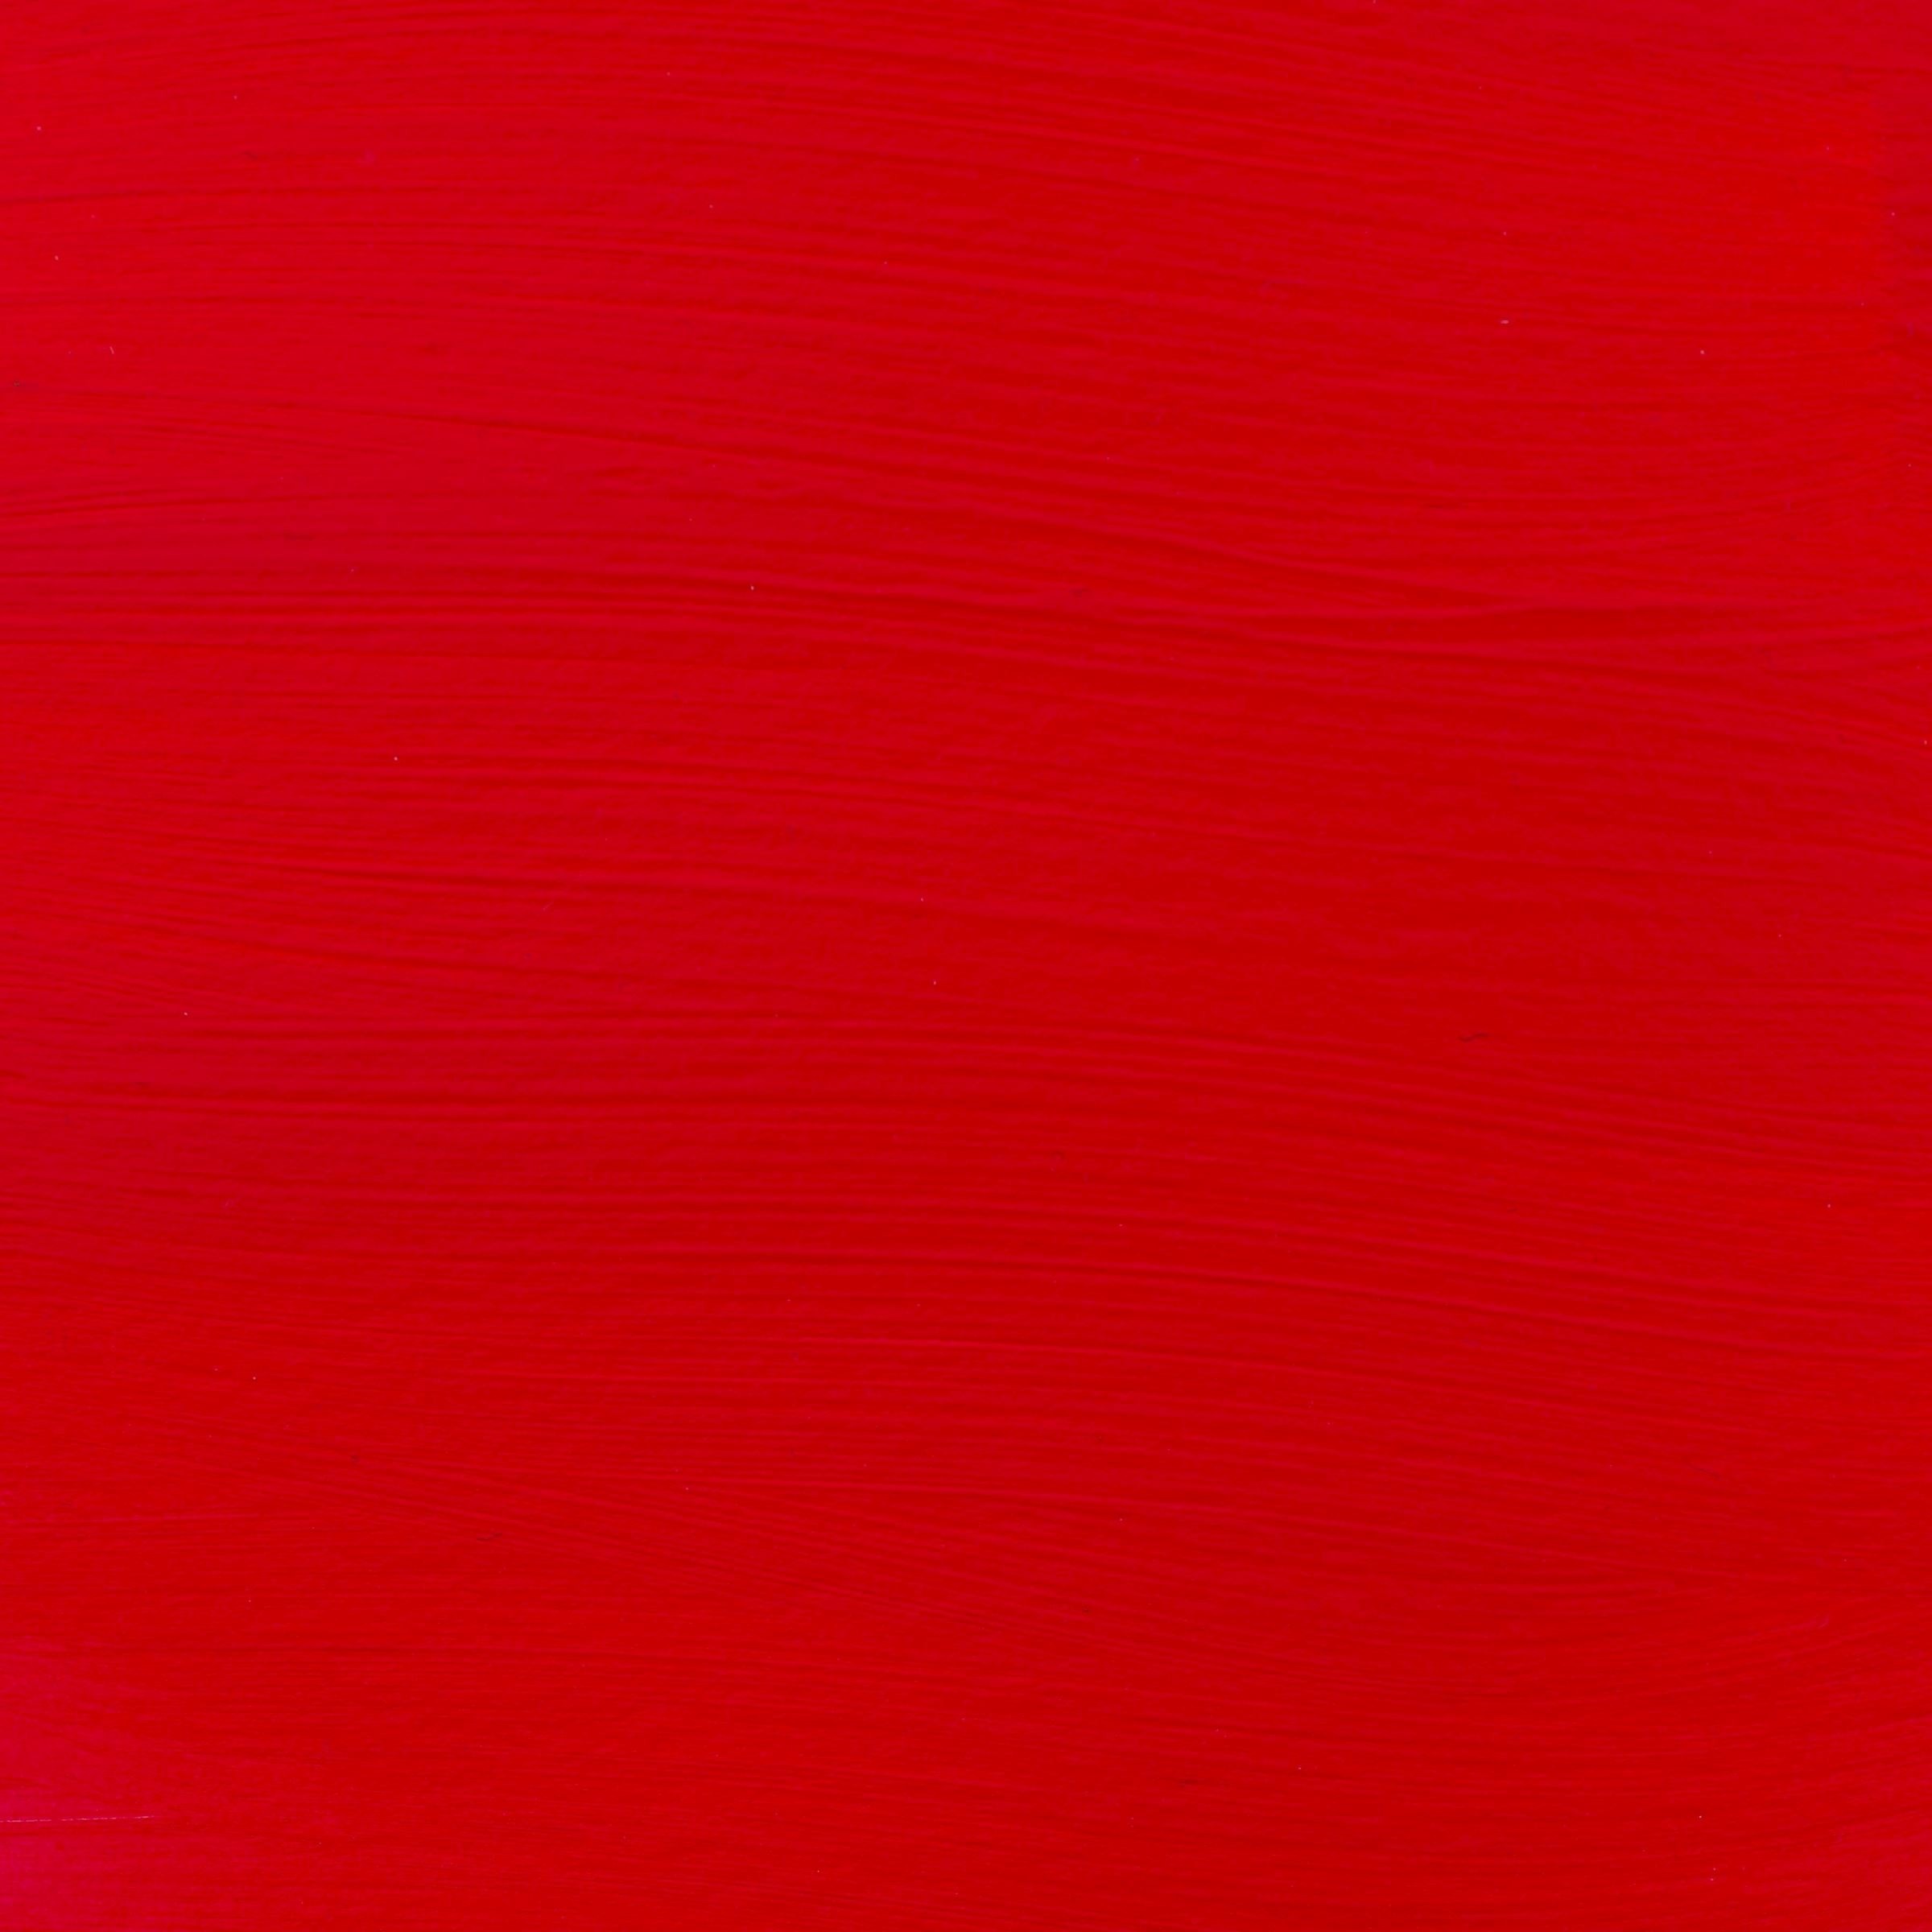 AMSTERDAM Peinture acrylique 500ml 17723962 rouge 396